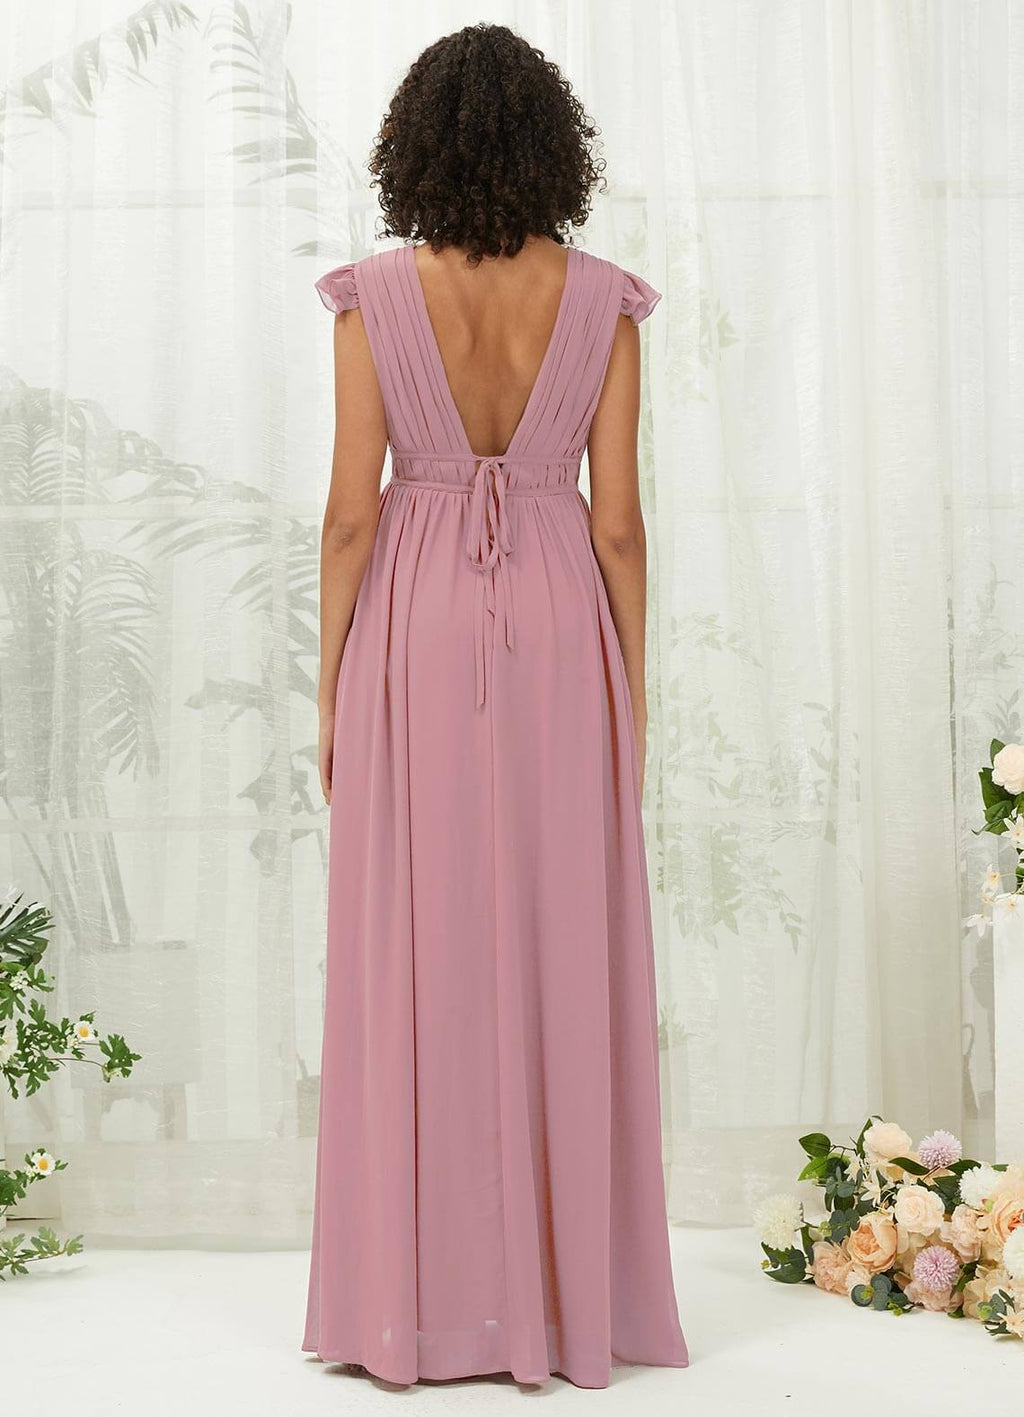 NZ Bridal Vintage Chiffon Floor Length Bridesmaid Dress With Slit R0410 Collins a